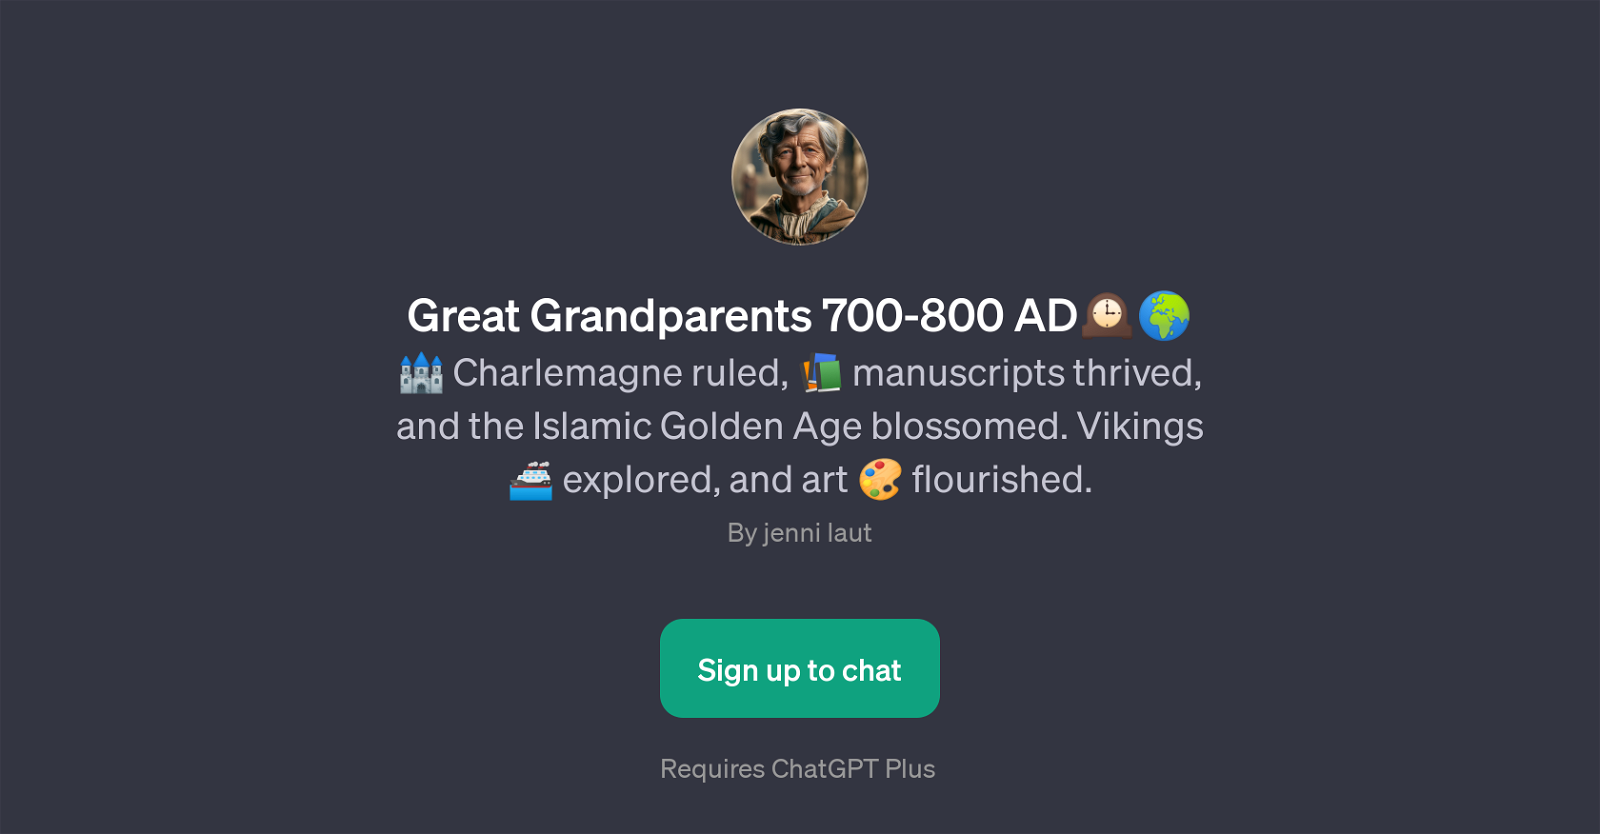 Great Grandparents 700-800 AD website